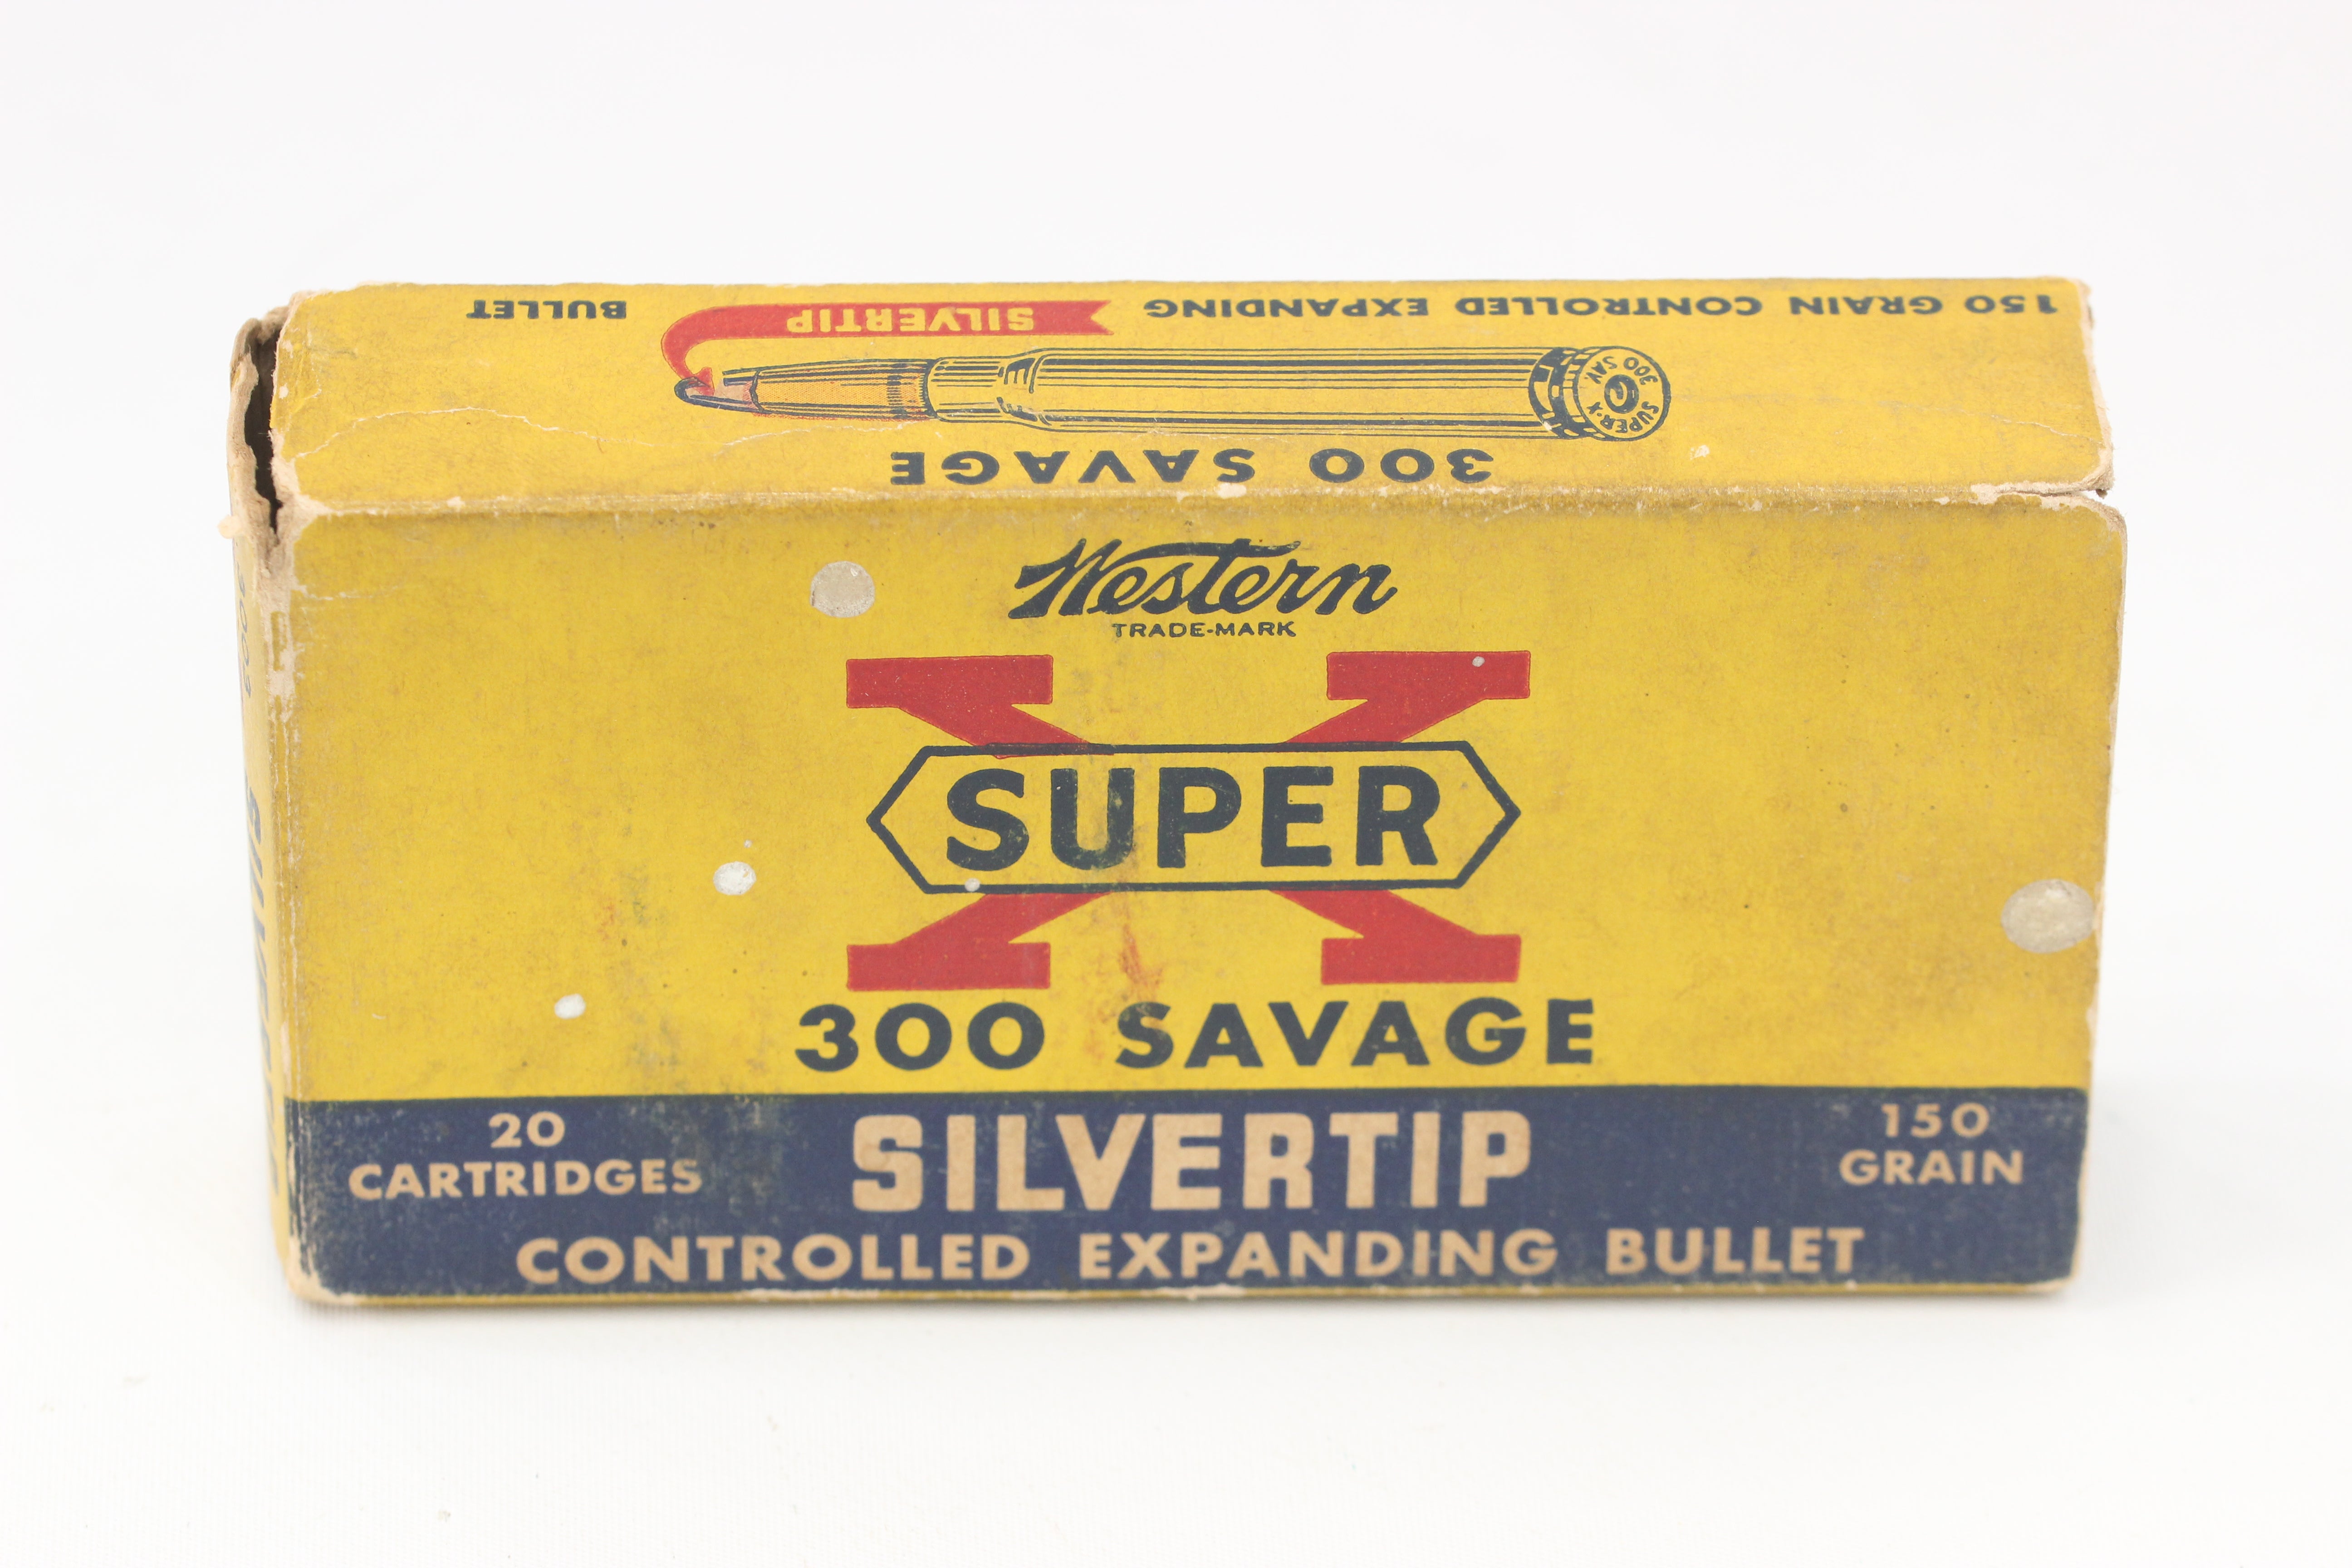 300 Savage Ammo - Mixed Box - Vintage Box